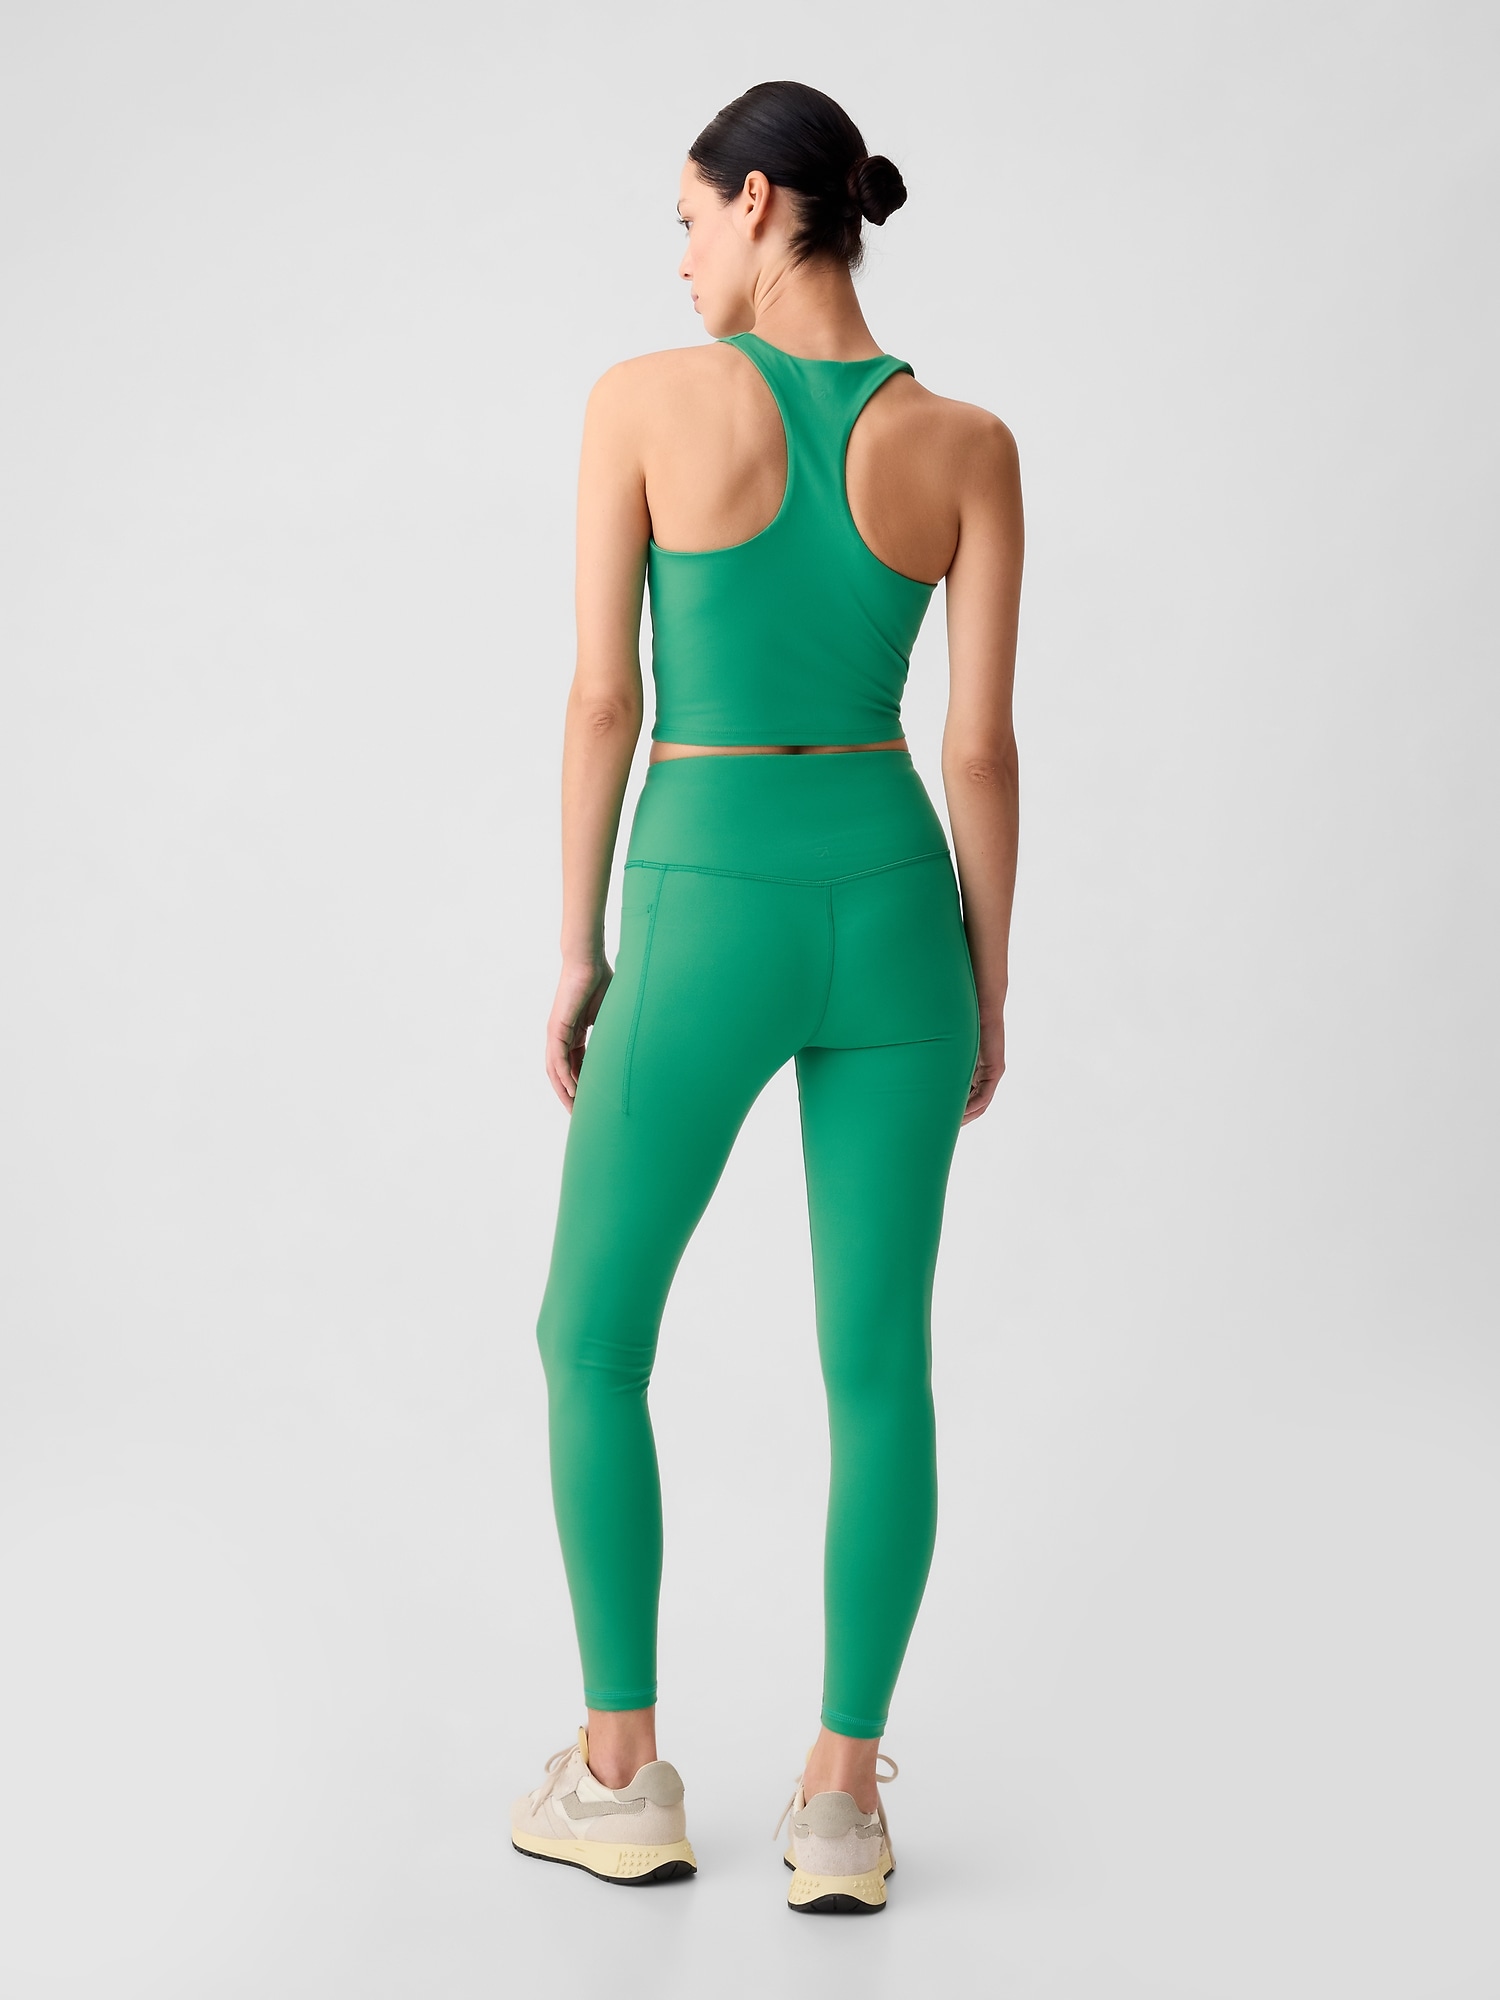 Cotton Women's Tall Leggings in Emerald